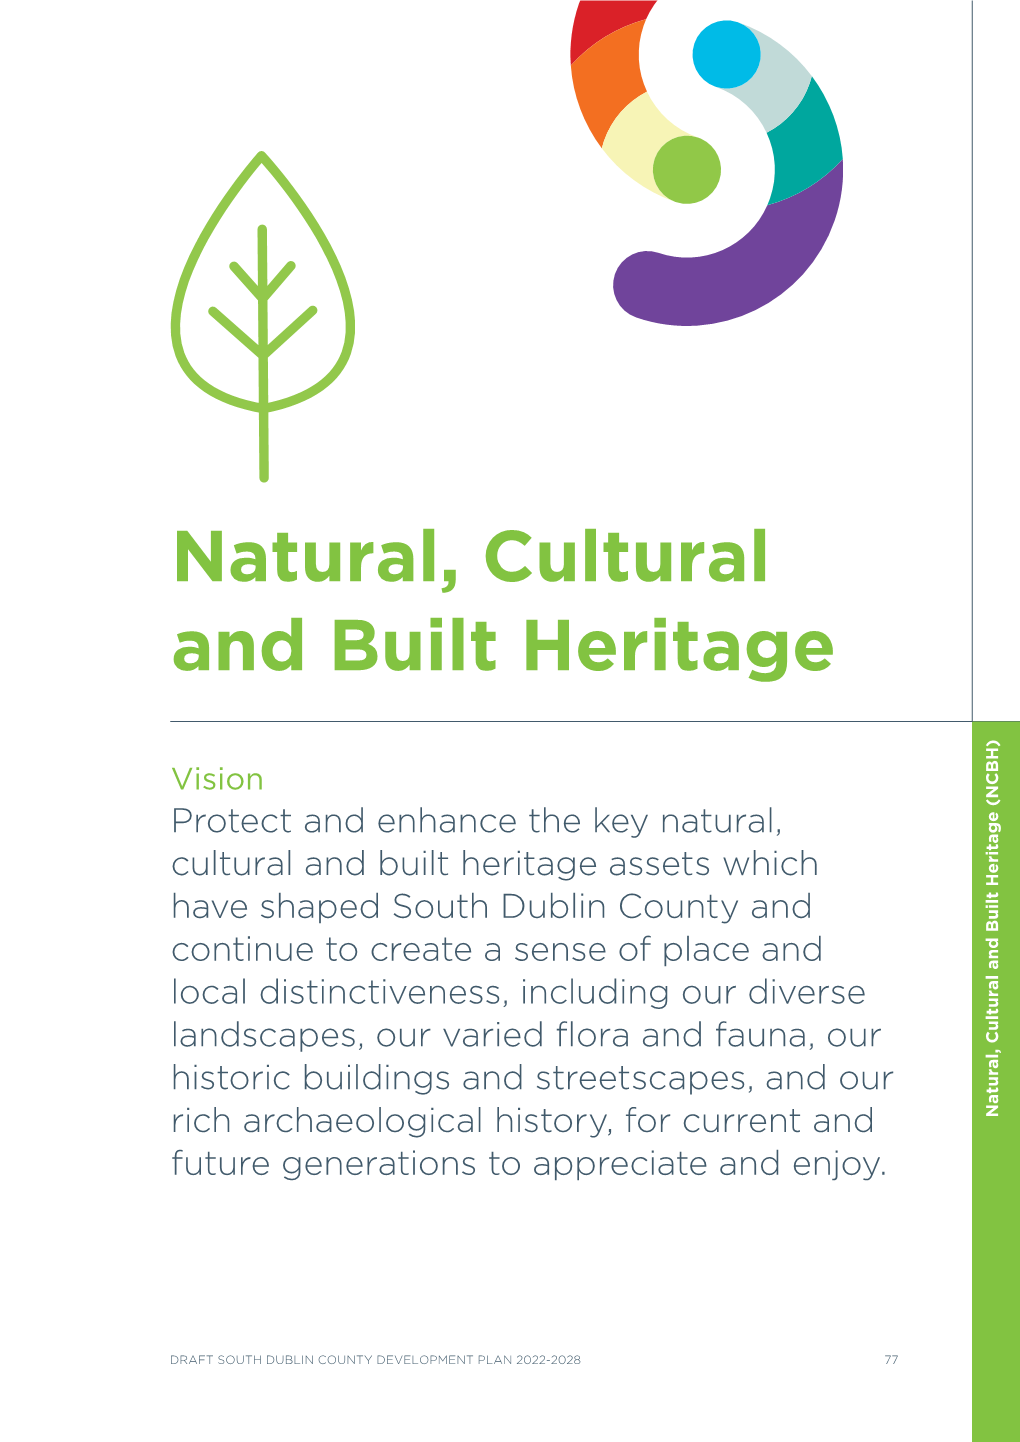 Natural, Cultural and Built Heritage